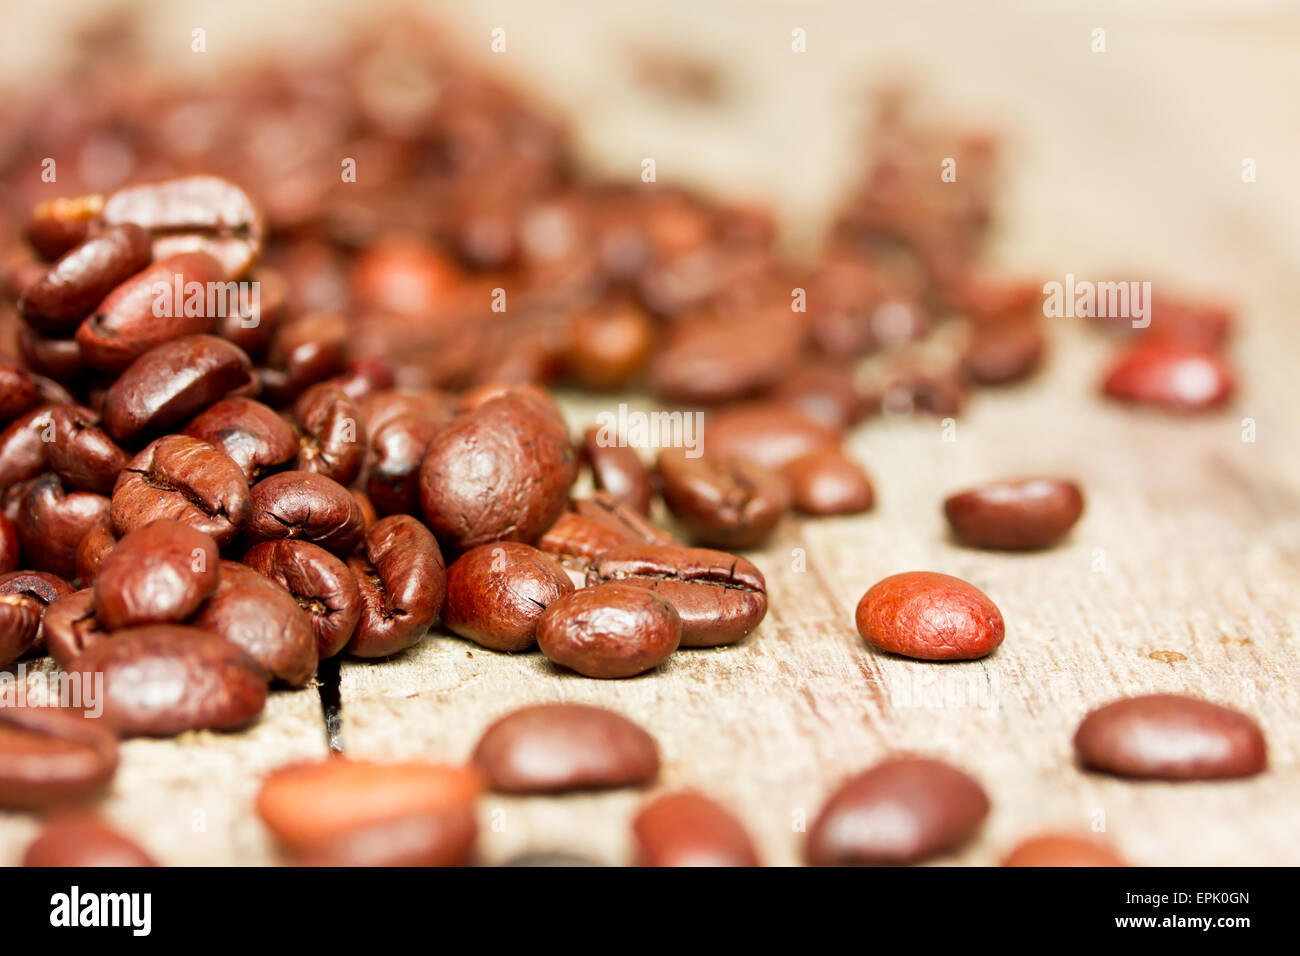 coffee beans Stock Photo